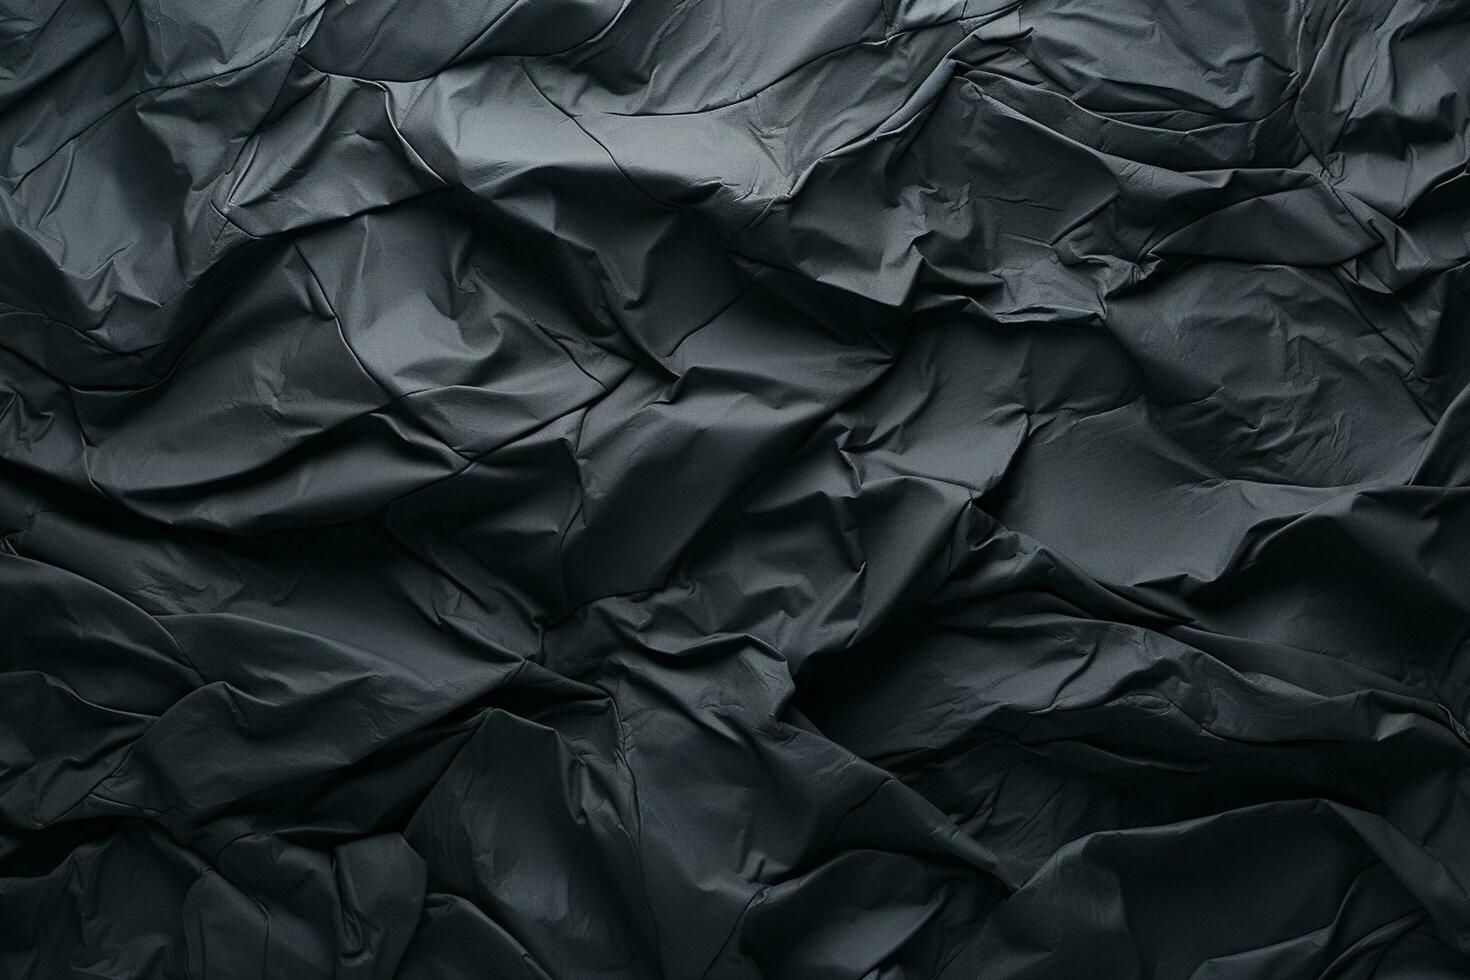 zwart verfrommeld papier achtergrond. structuur van verfrommeld papier. ai gegenereerd foto